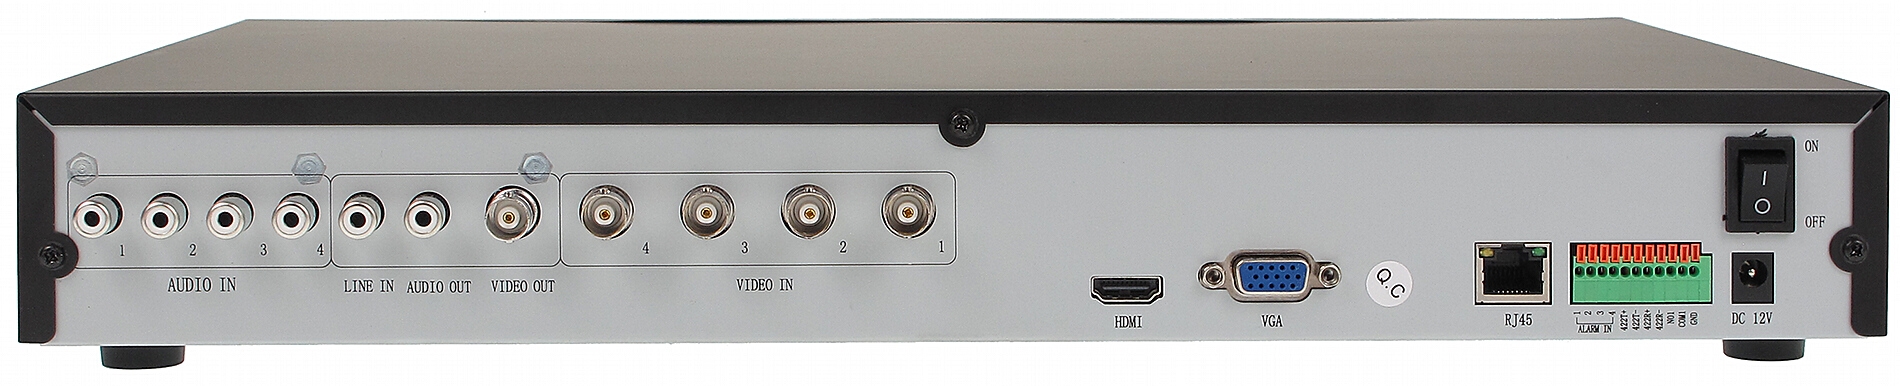 DVR HDR-041 STANDARD: HD-SDI, 4 CHANNELS - Recorders - Delta